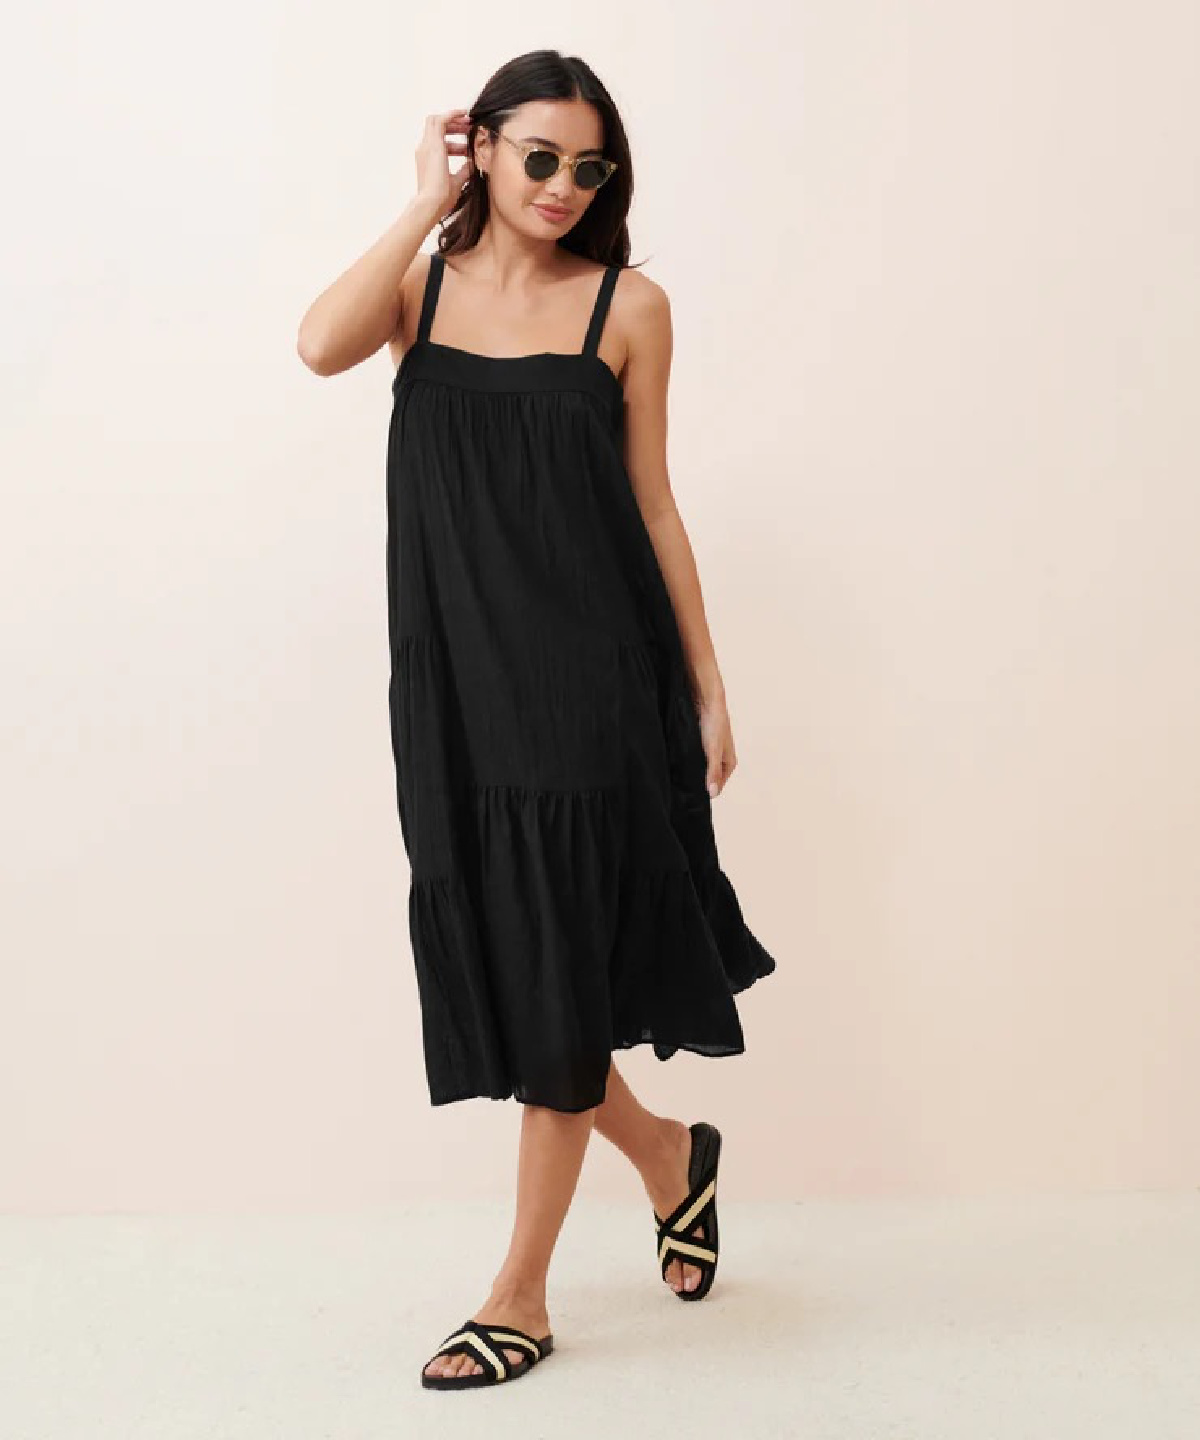 Model wearing Jenni Kayne black summer dress.